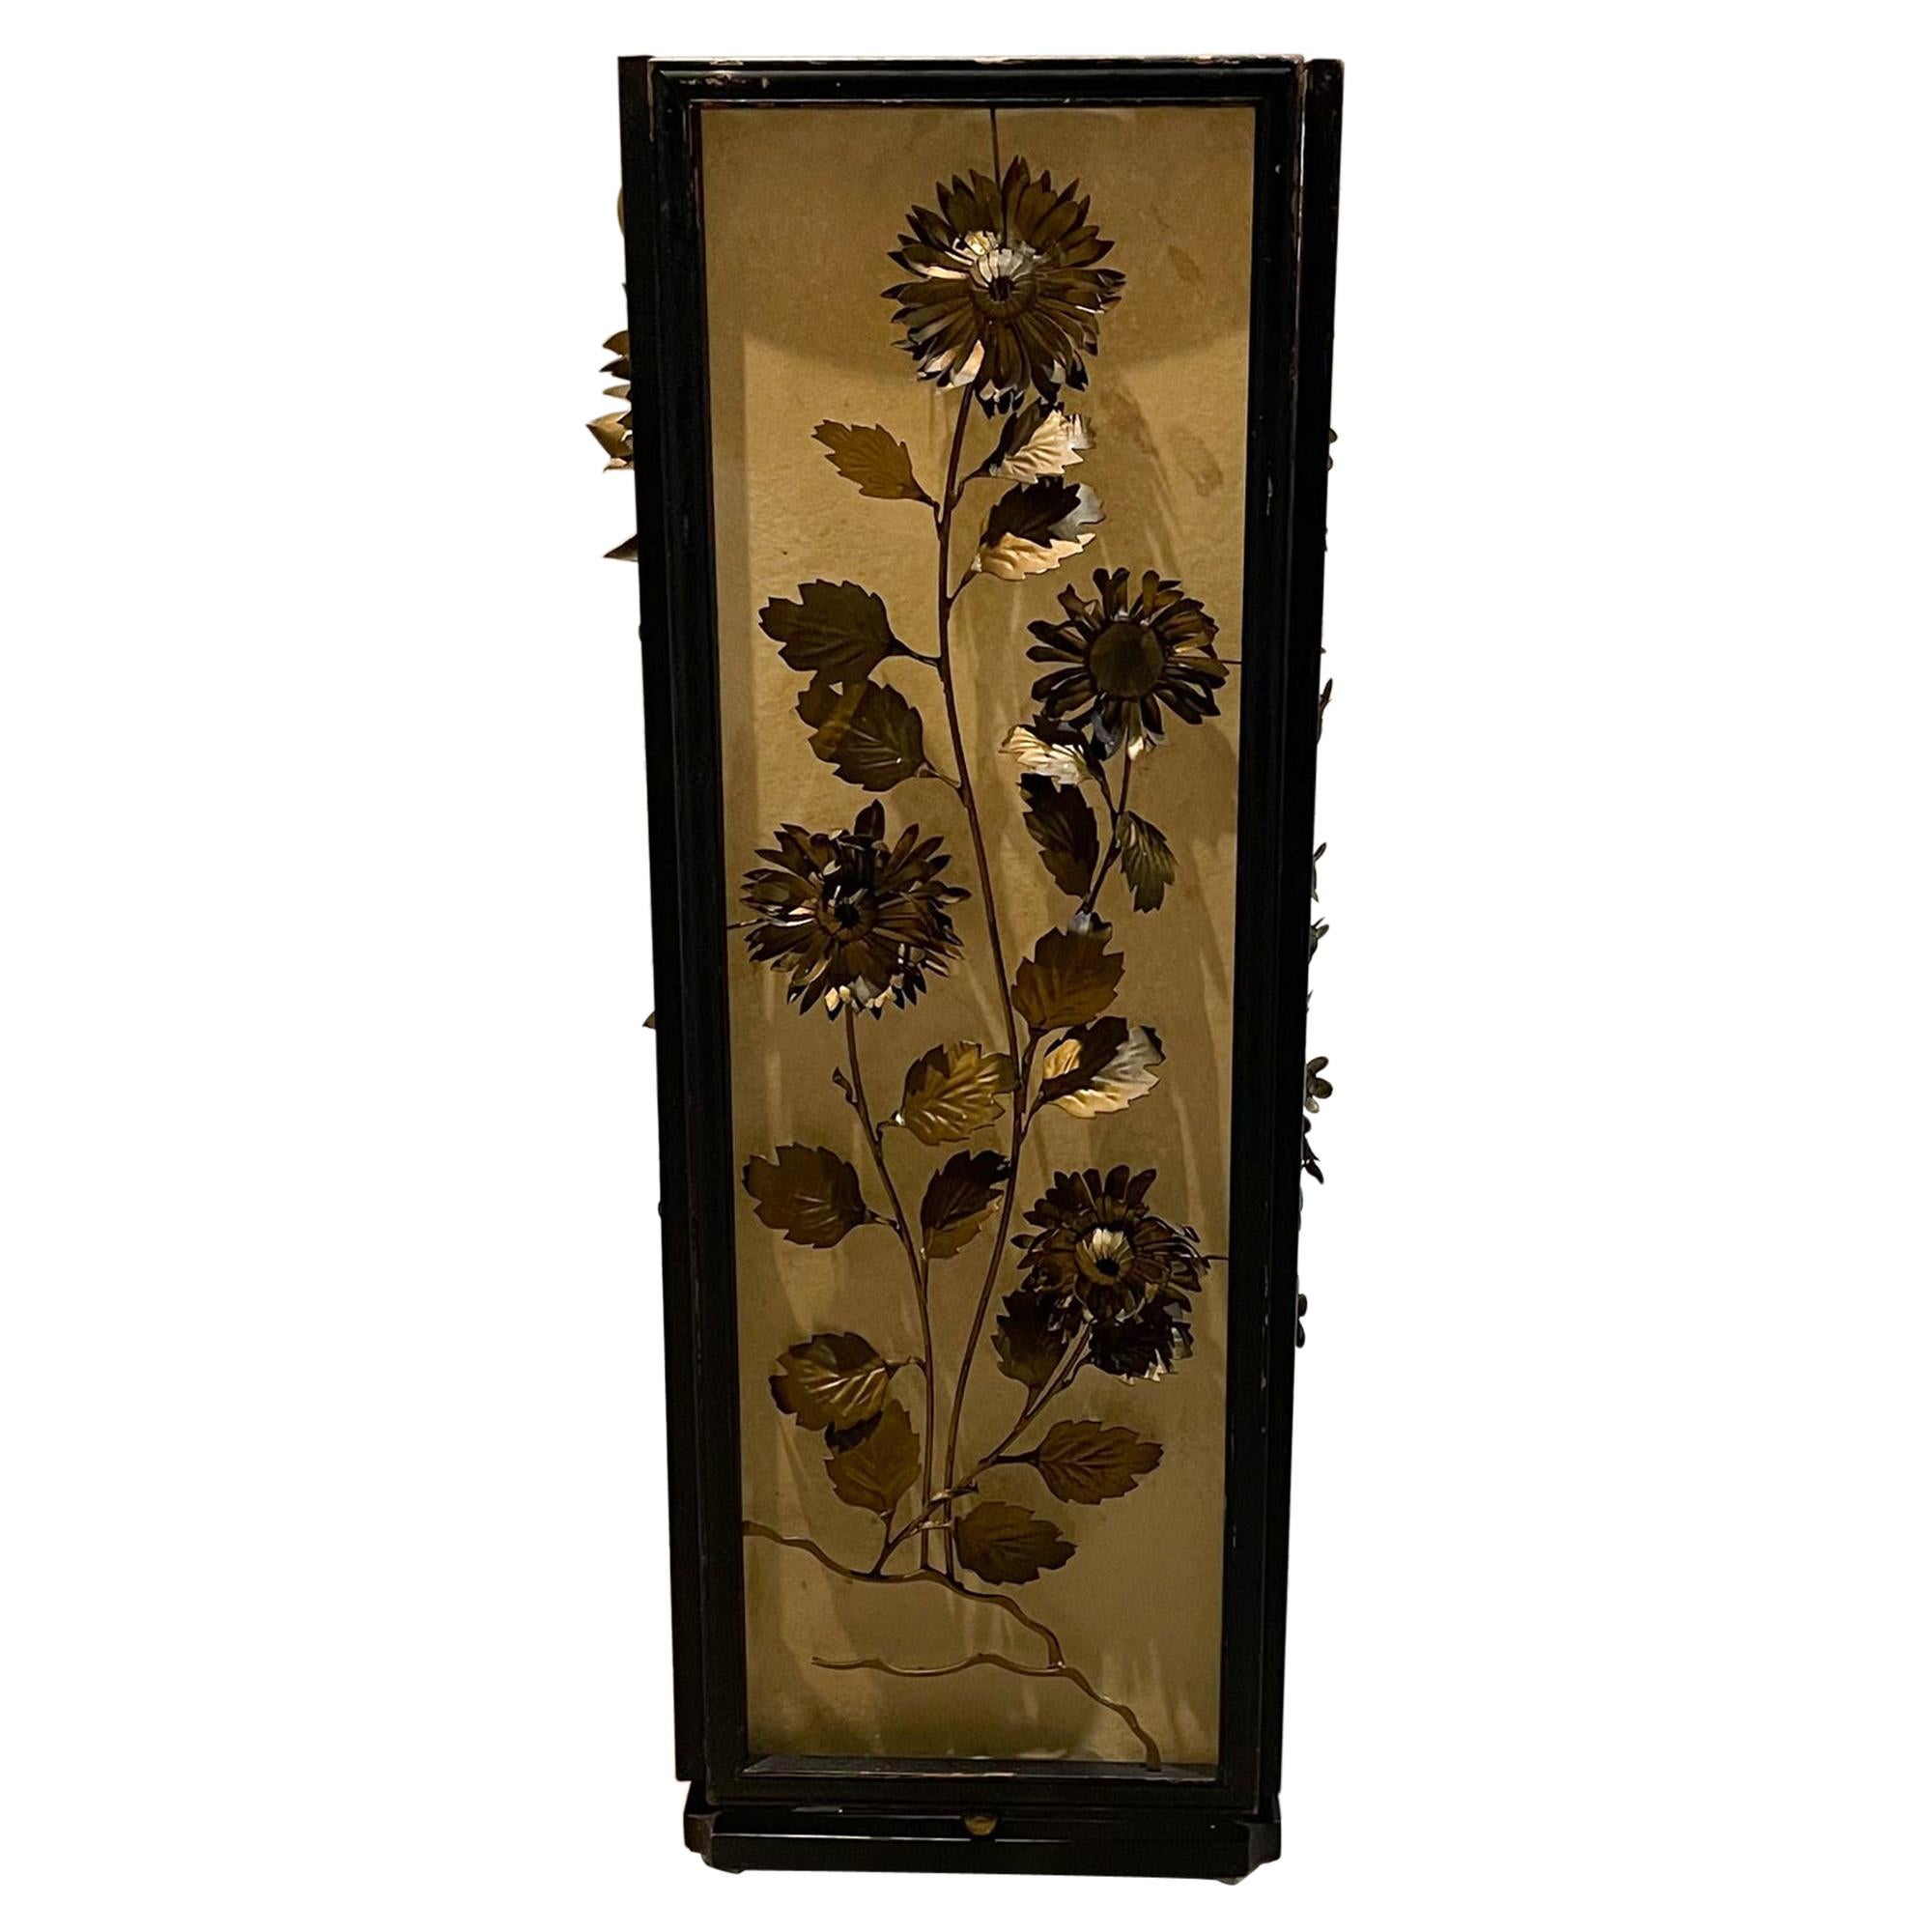 Exquisite Japanese Wood Lantern Table Lamp Unique Brass Flower Panels 1960s Asia